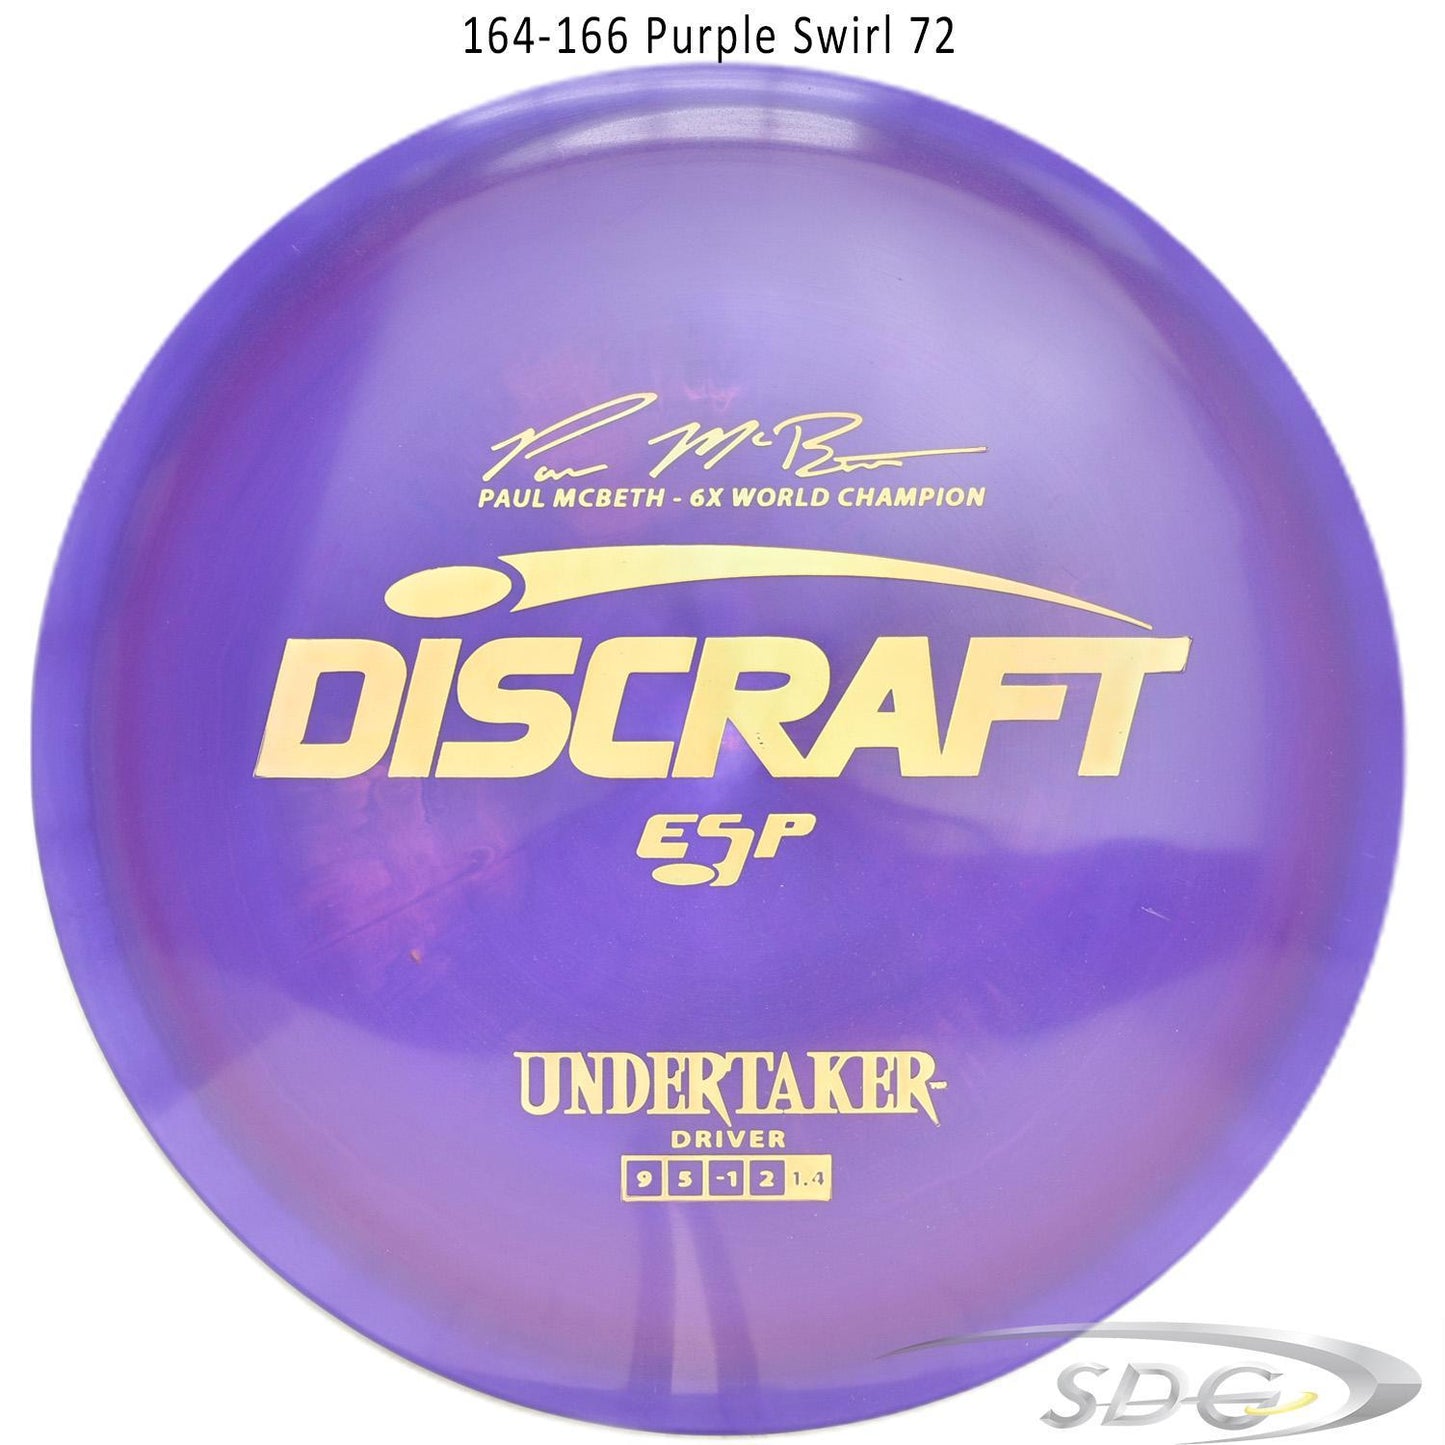 discraft-esp-undertaker-6x-paul-mcbeth-signature-series-disc-golf-distance-driver 164-166 Purple Swirl 72